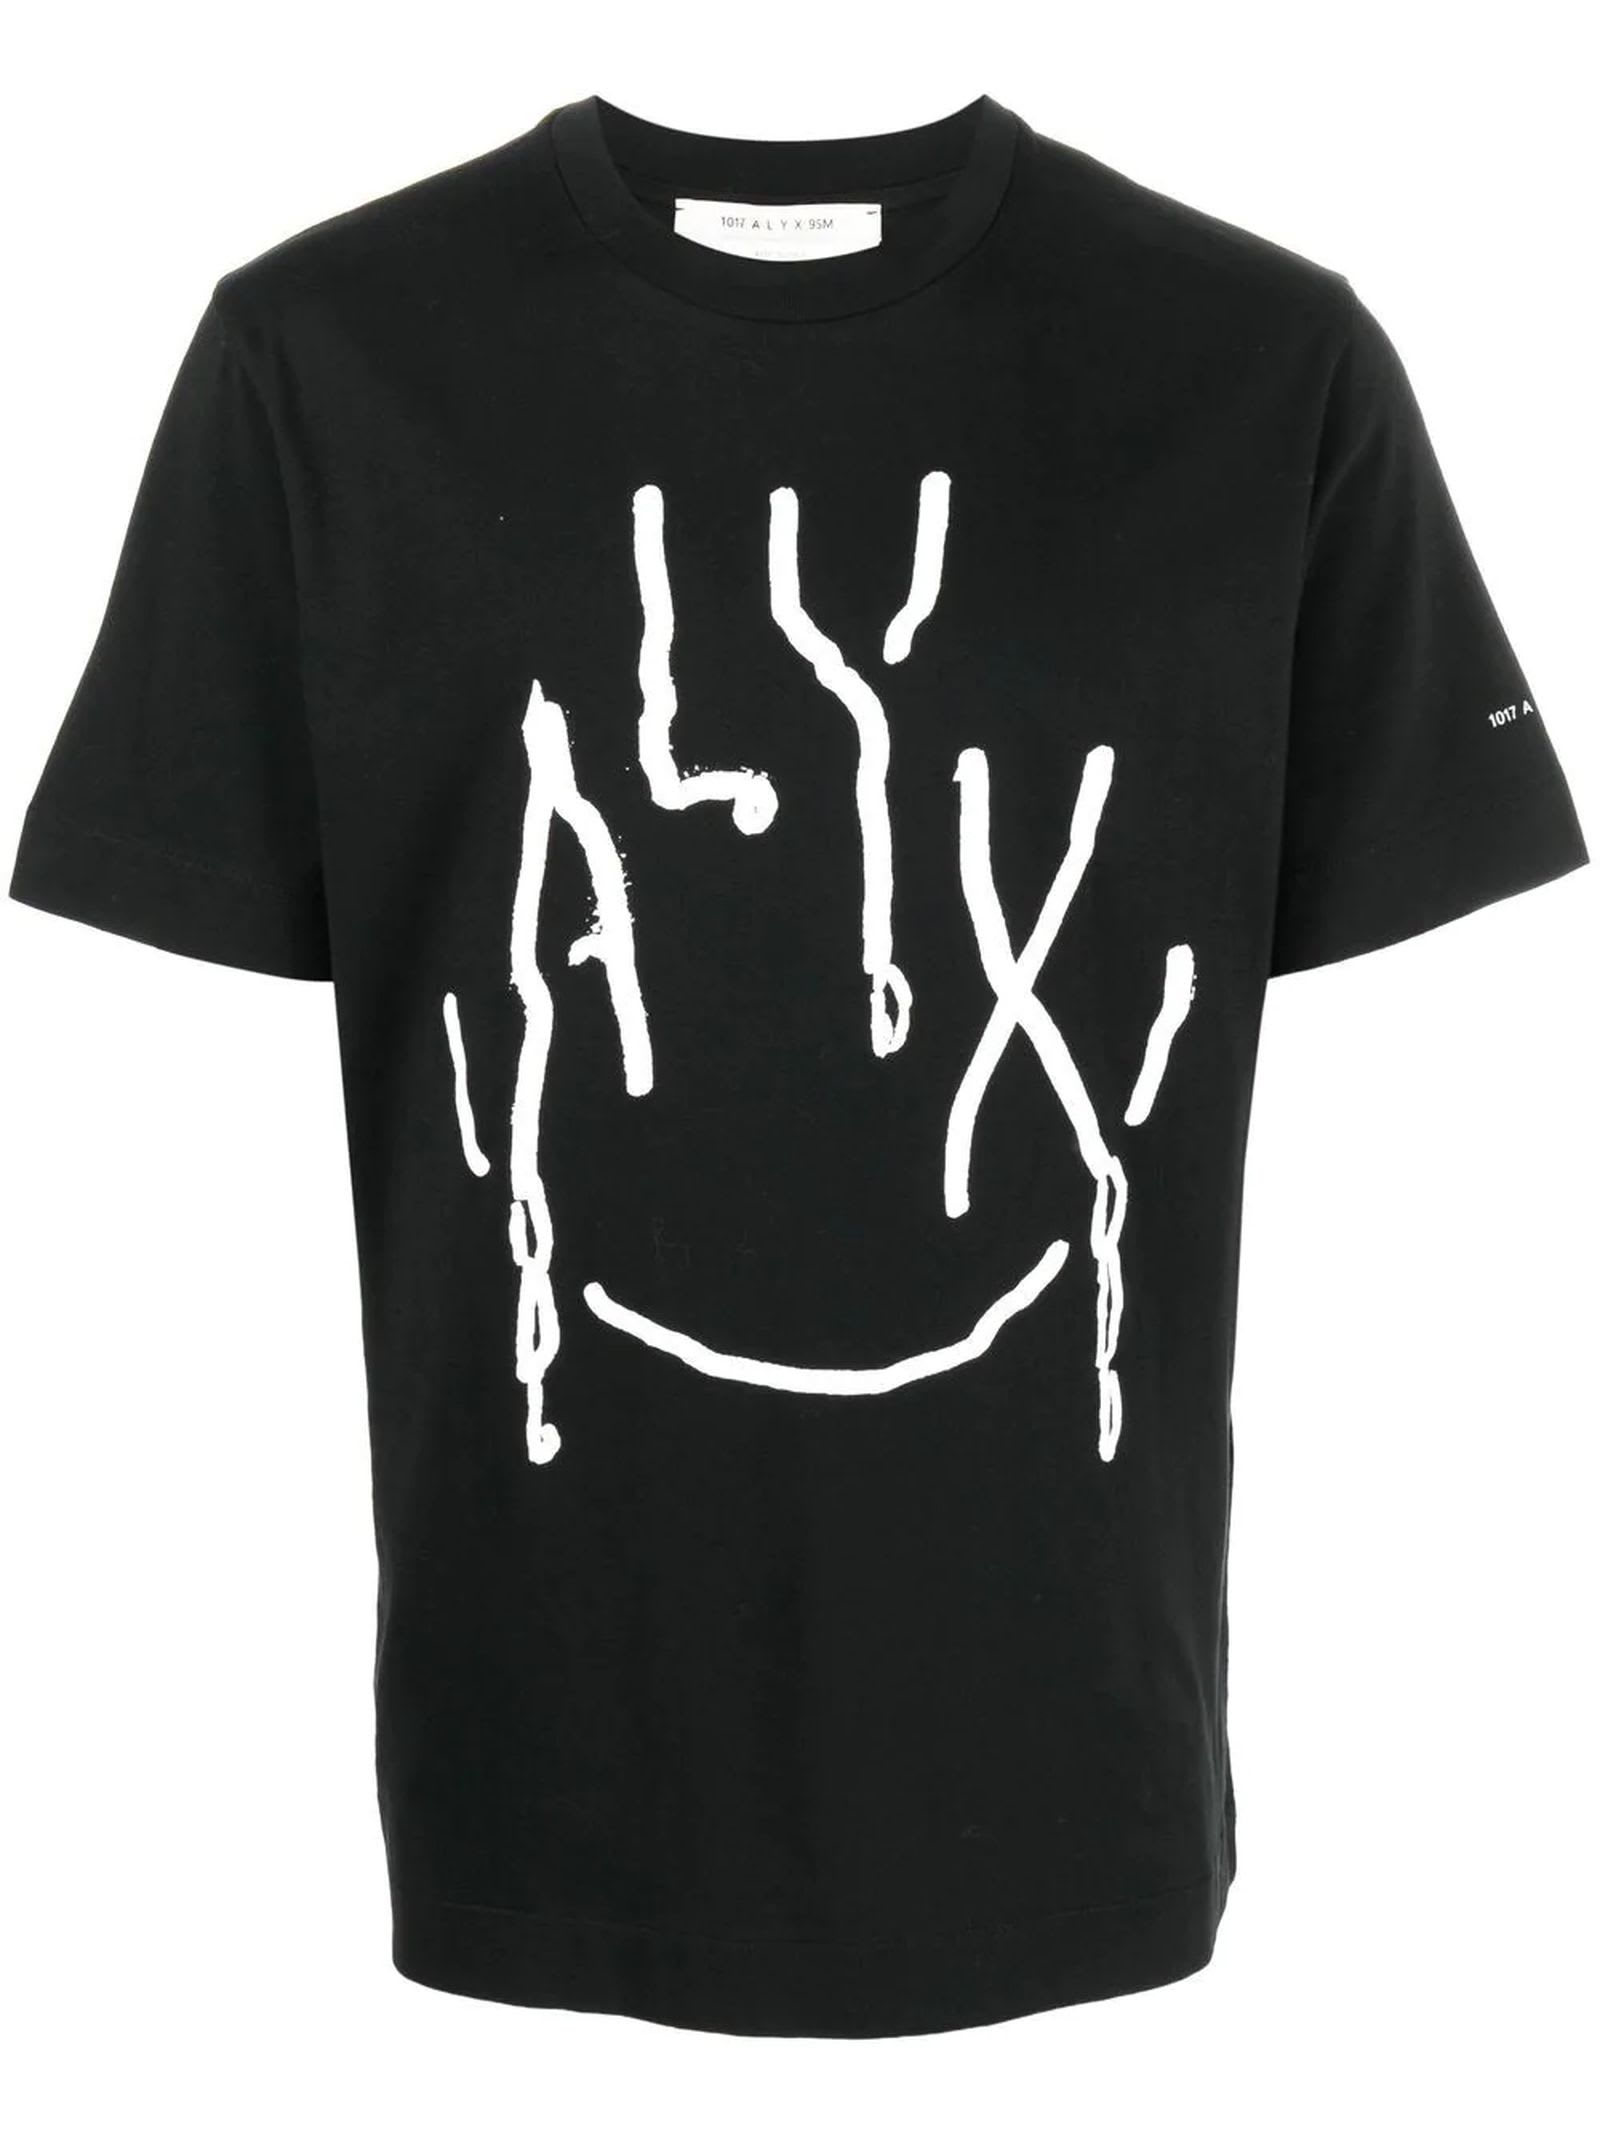 1017 ALYX 9SM Black Cotton T-shirt